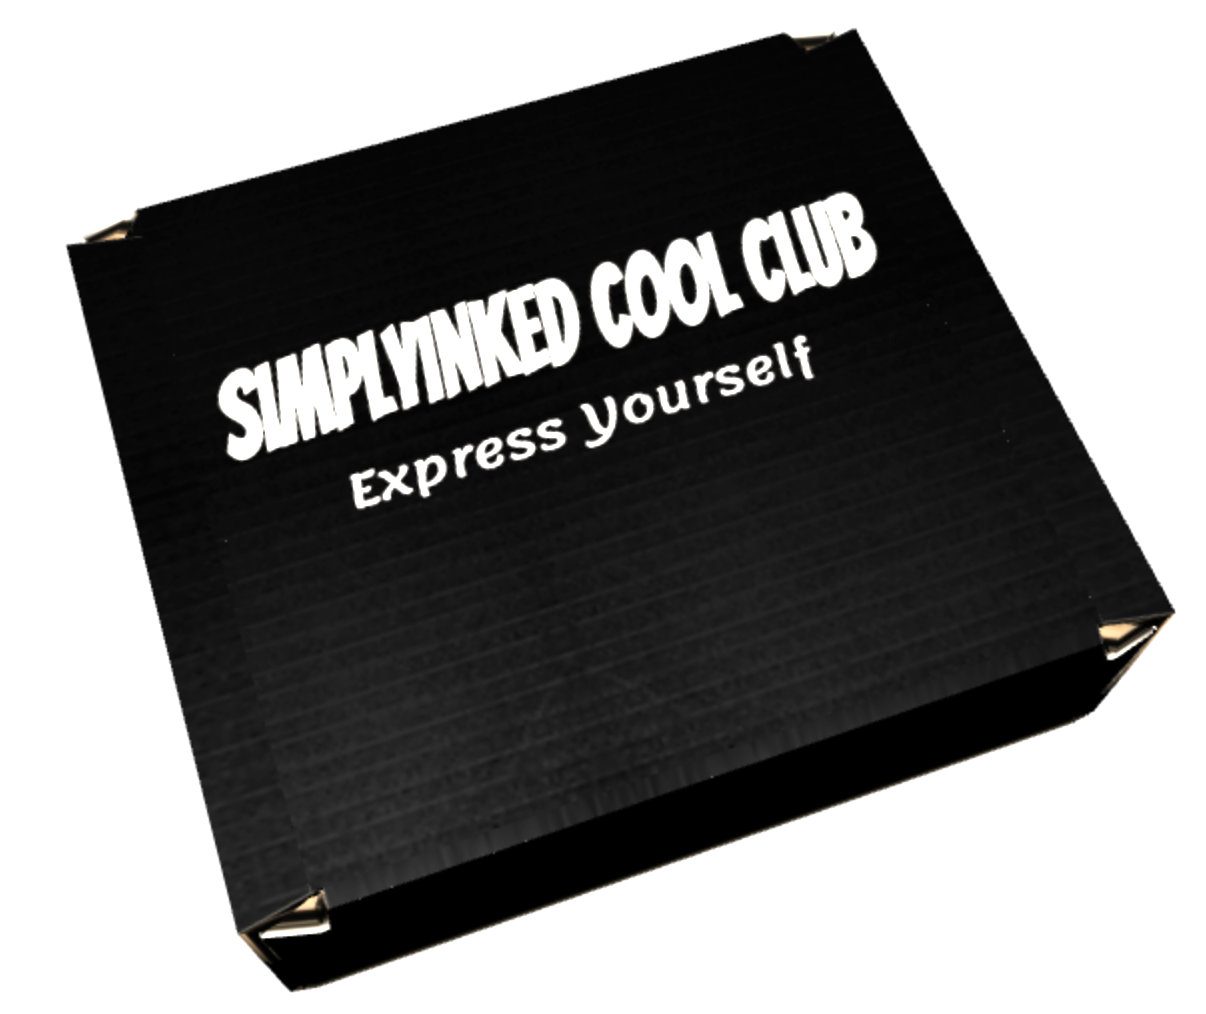 SimplyInked Cool Club